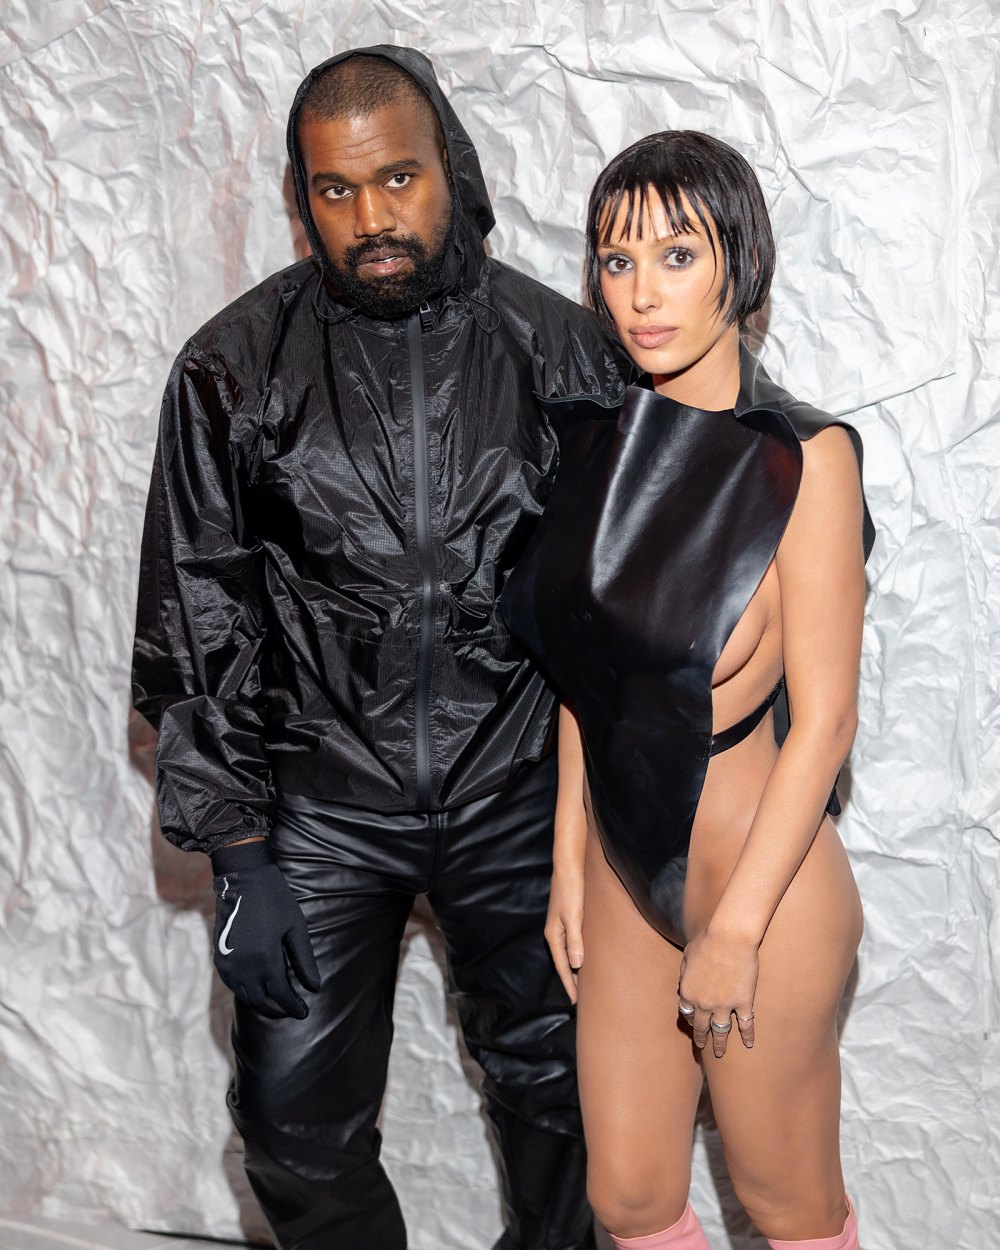 Kanye West 的妻子 Bianca Censori 猛烈抨击她向 Yeezy 员工发送色情内容的“悲惨而饥渴的谎言”